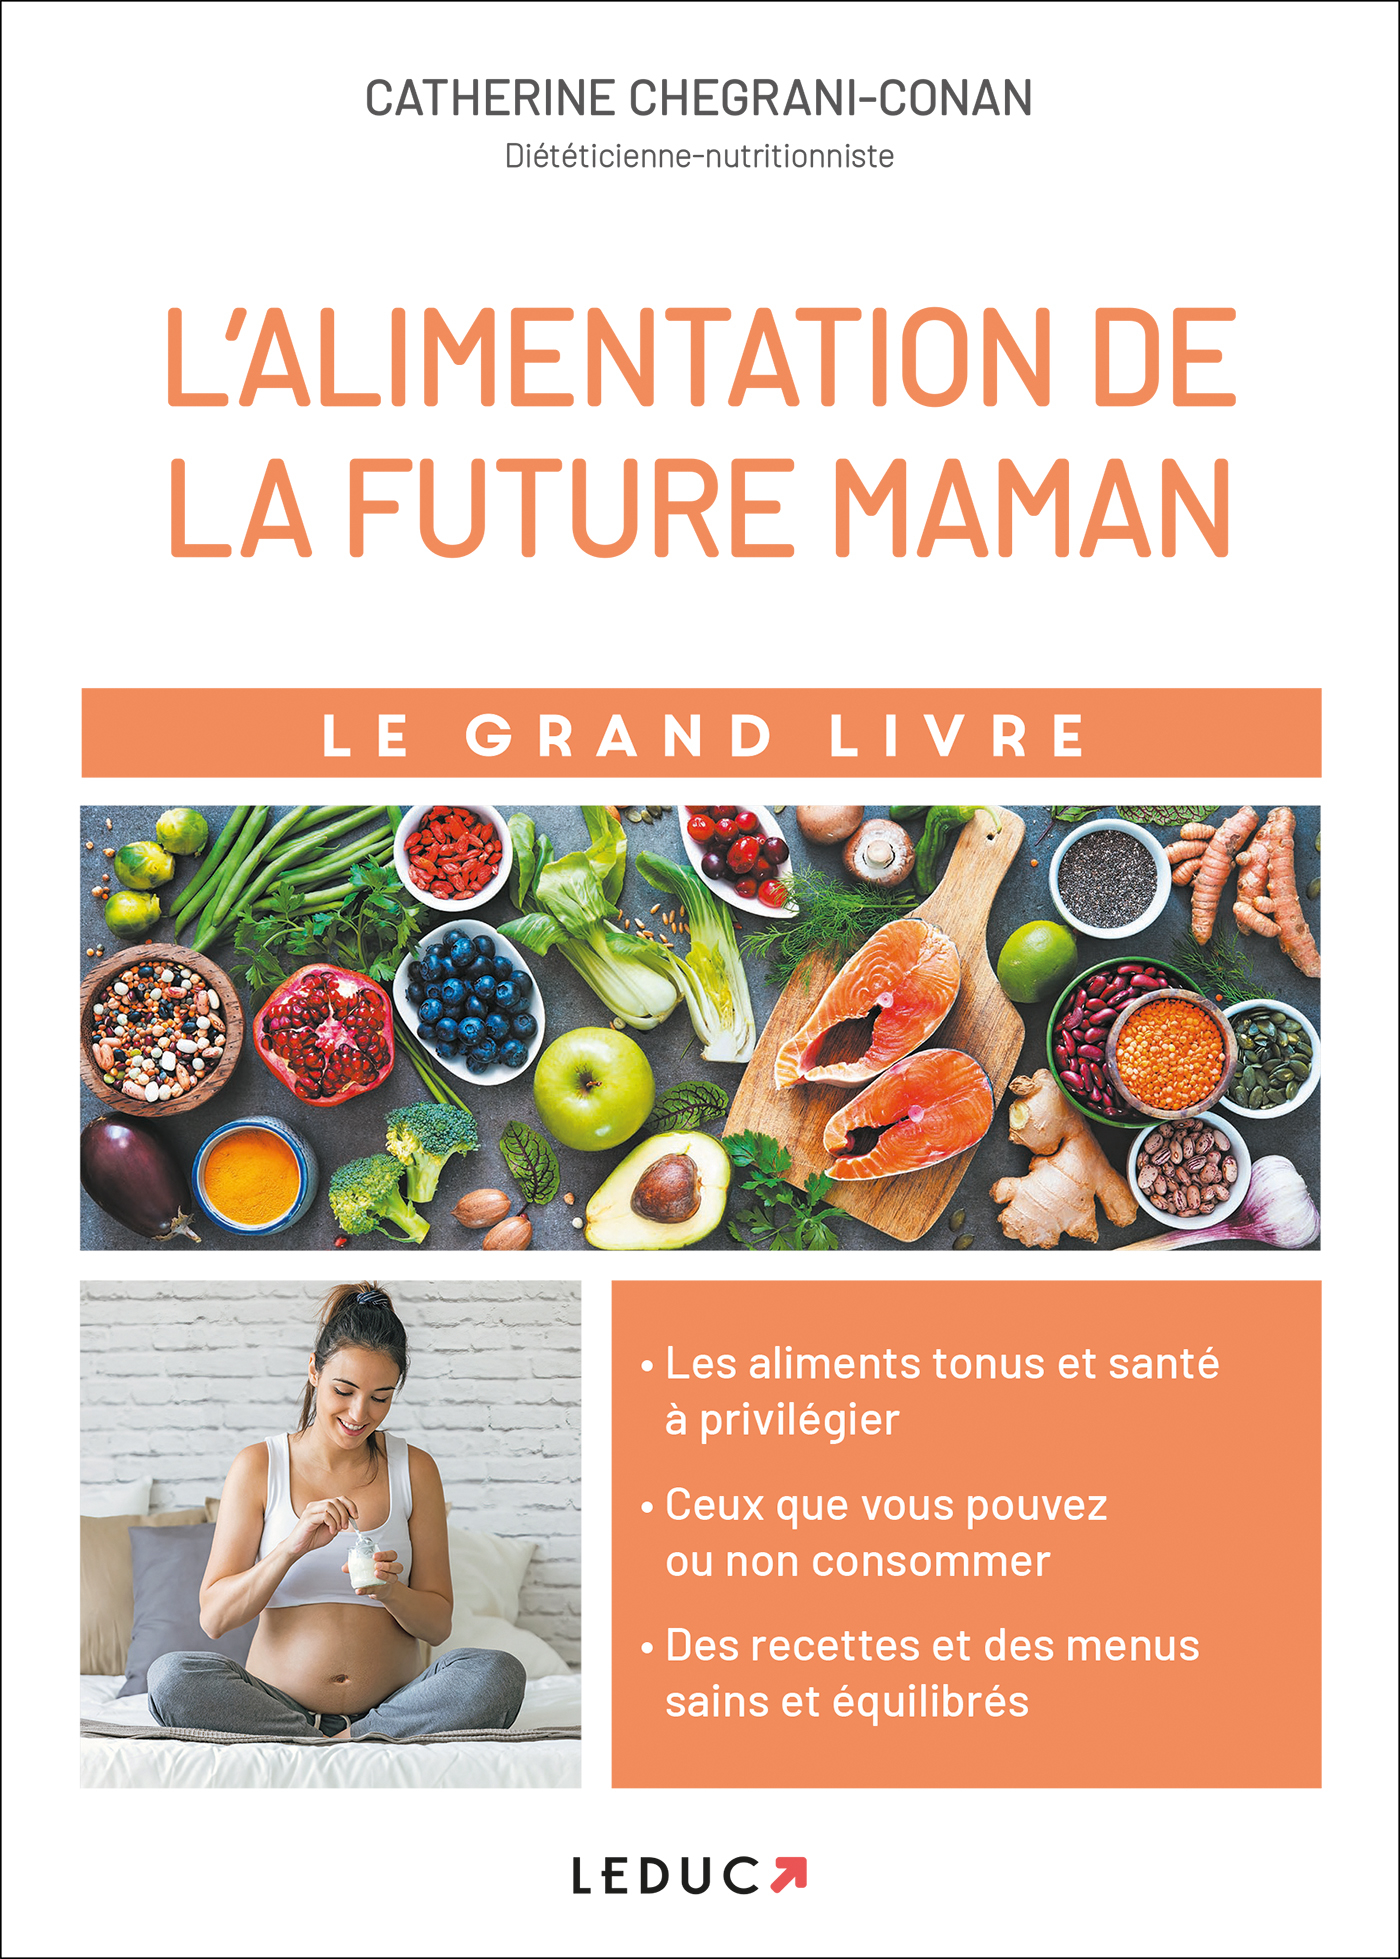 Le grand livre de l'alimentation de la future maman - Les aliments